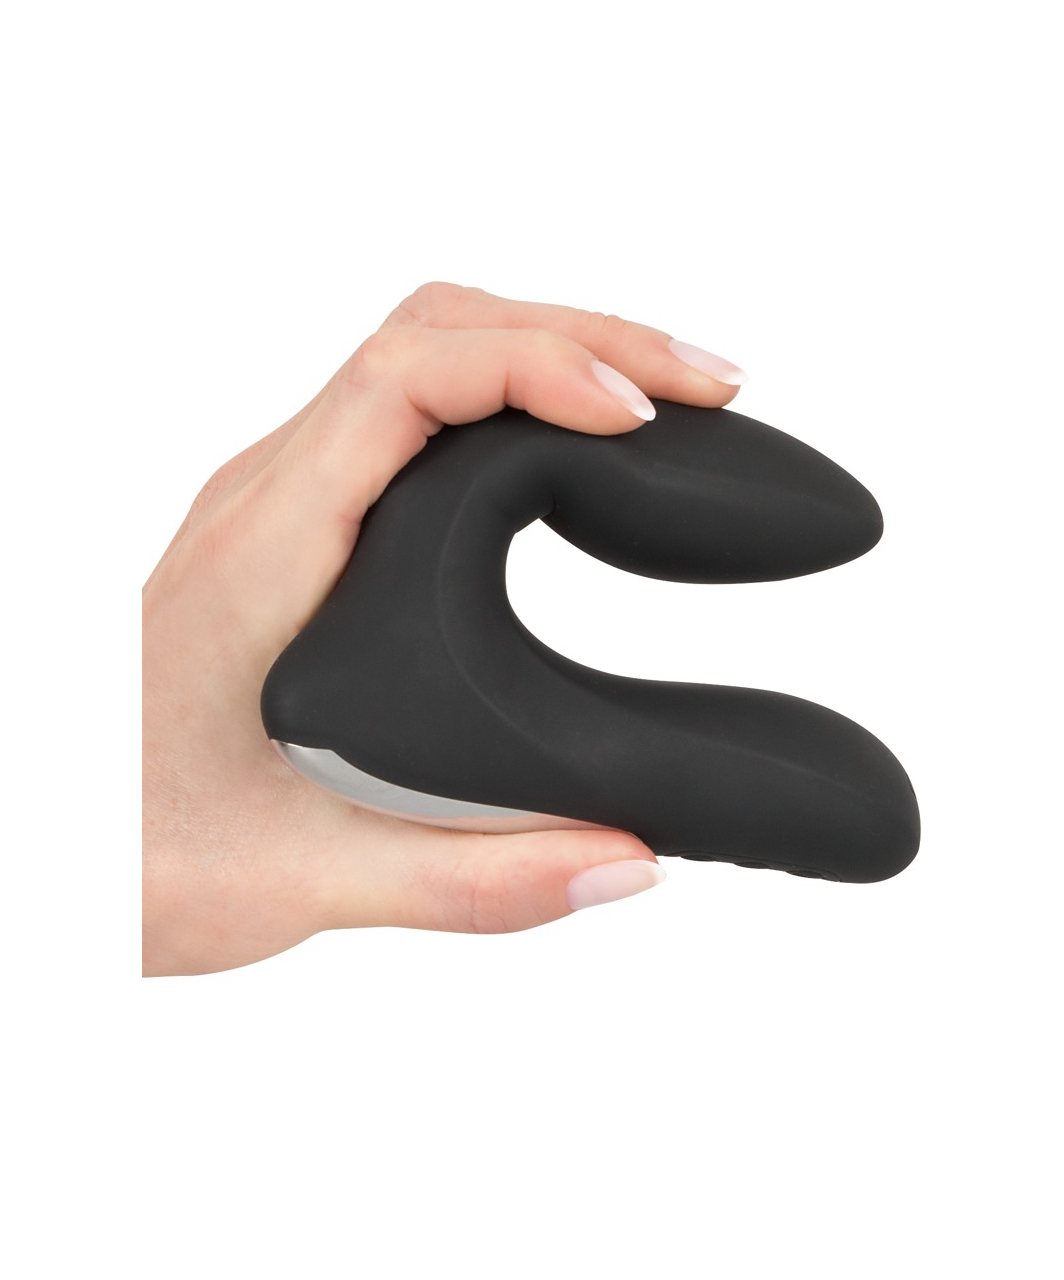 XOUXOU Inflatable Prostate Vibrator